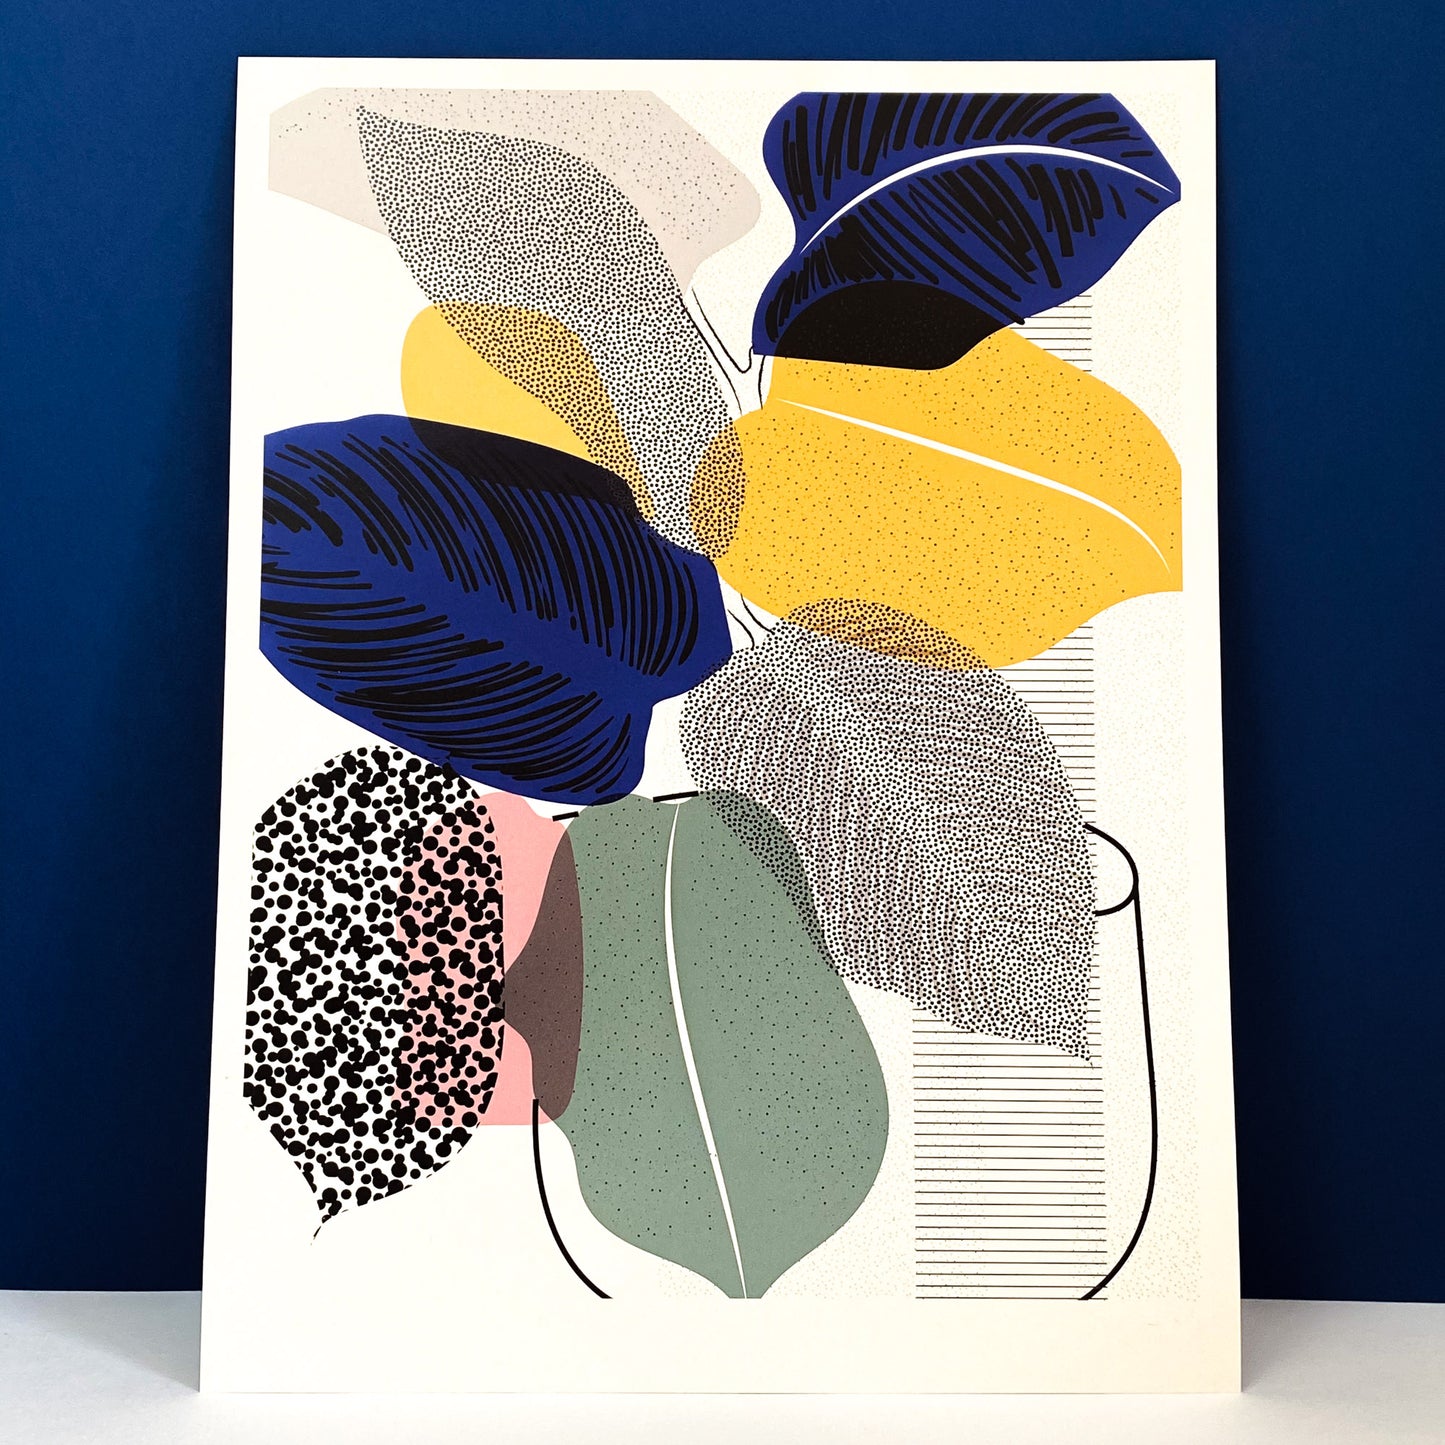 Calathea Pinstripe Plant Art Print by The Print Lass. Shown against a blue background